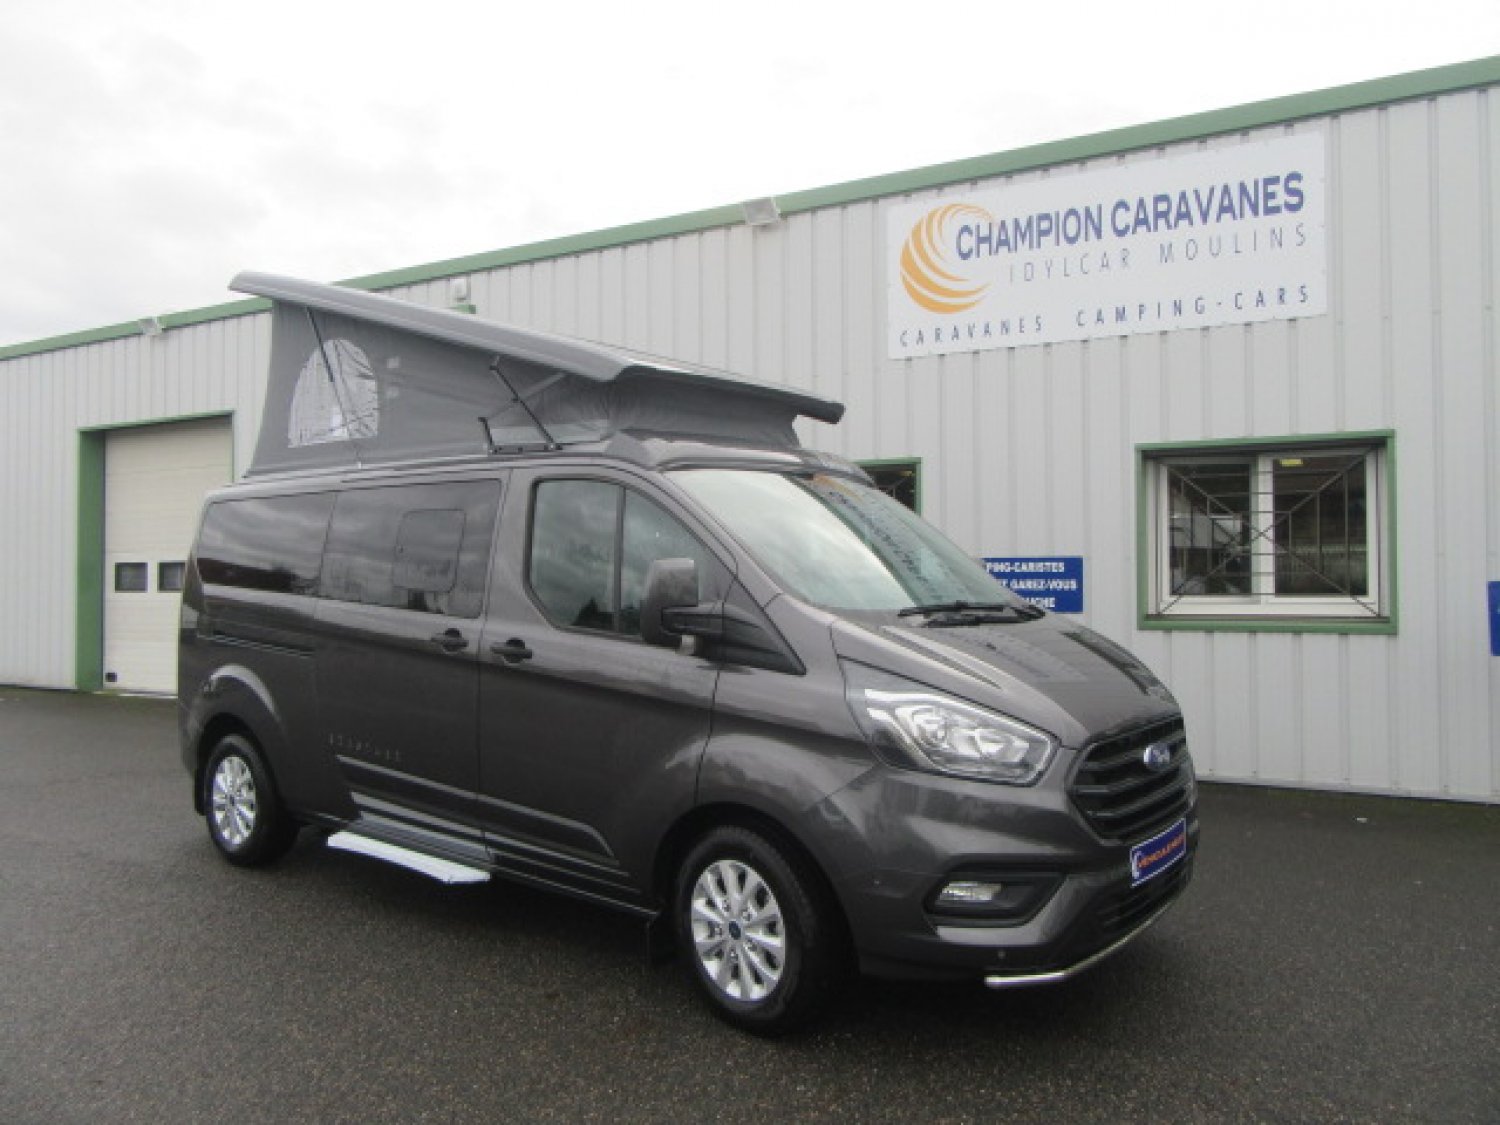 Antoine Caravanes et Camping Car - Burstner COPA C 530 à 68 055 €